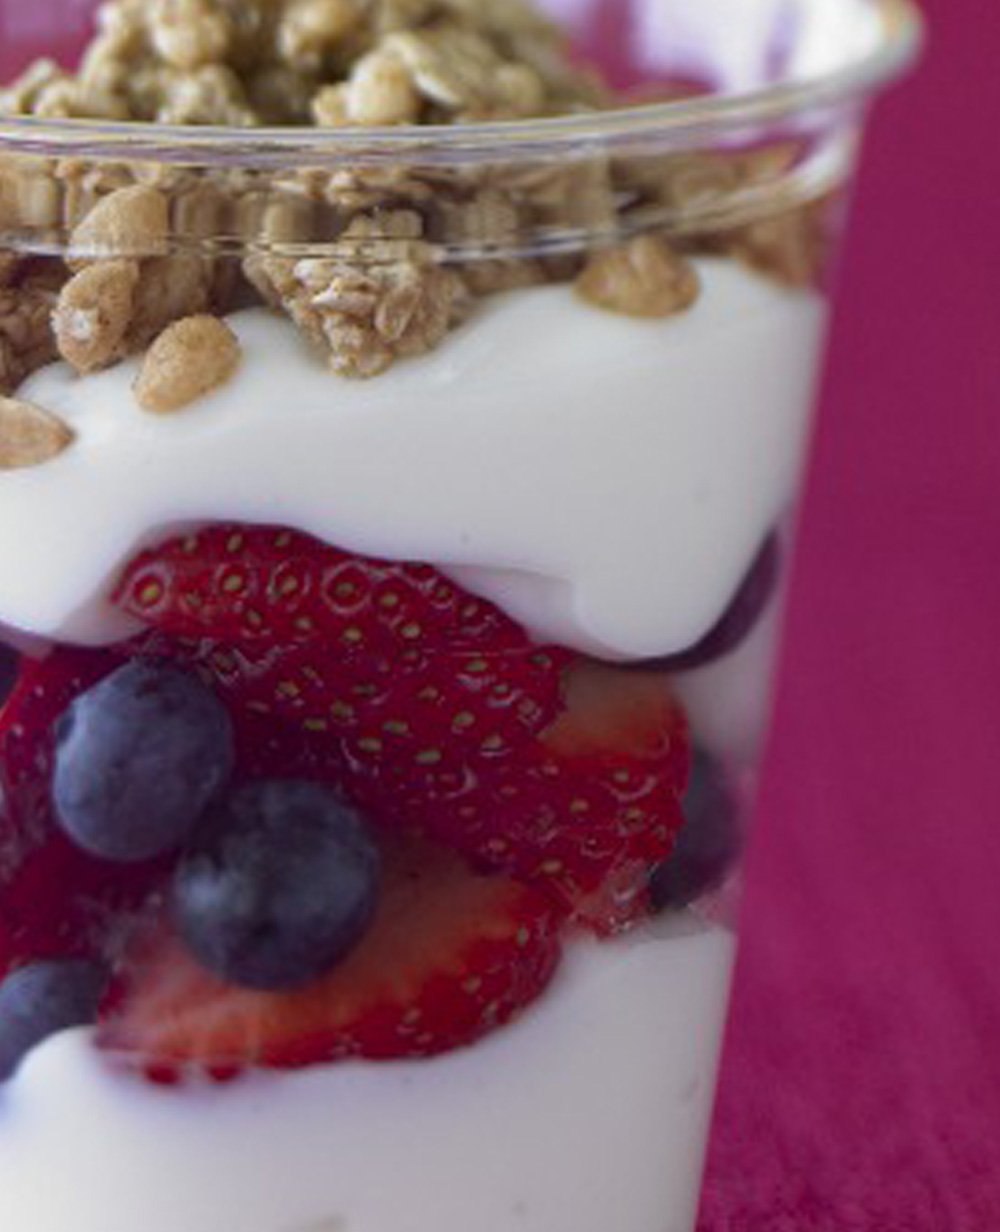 Yogurt cup with fruit